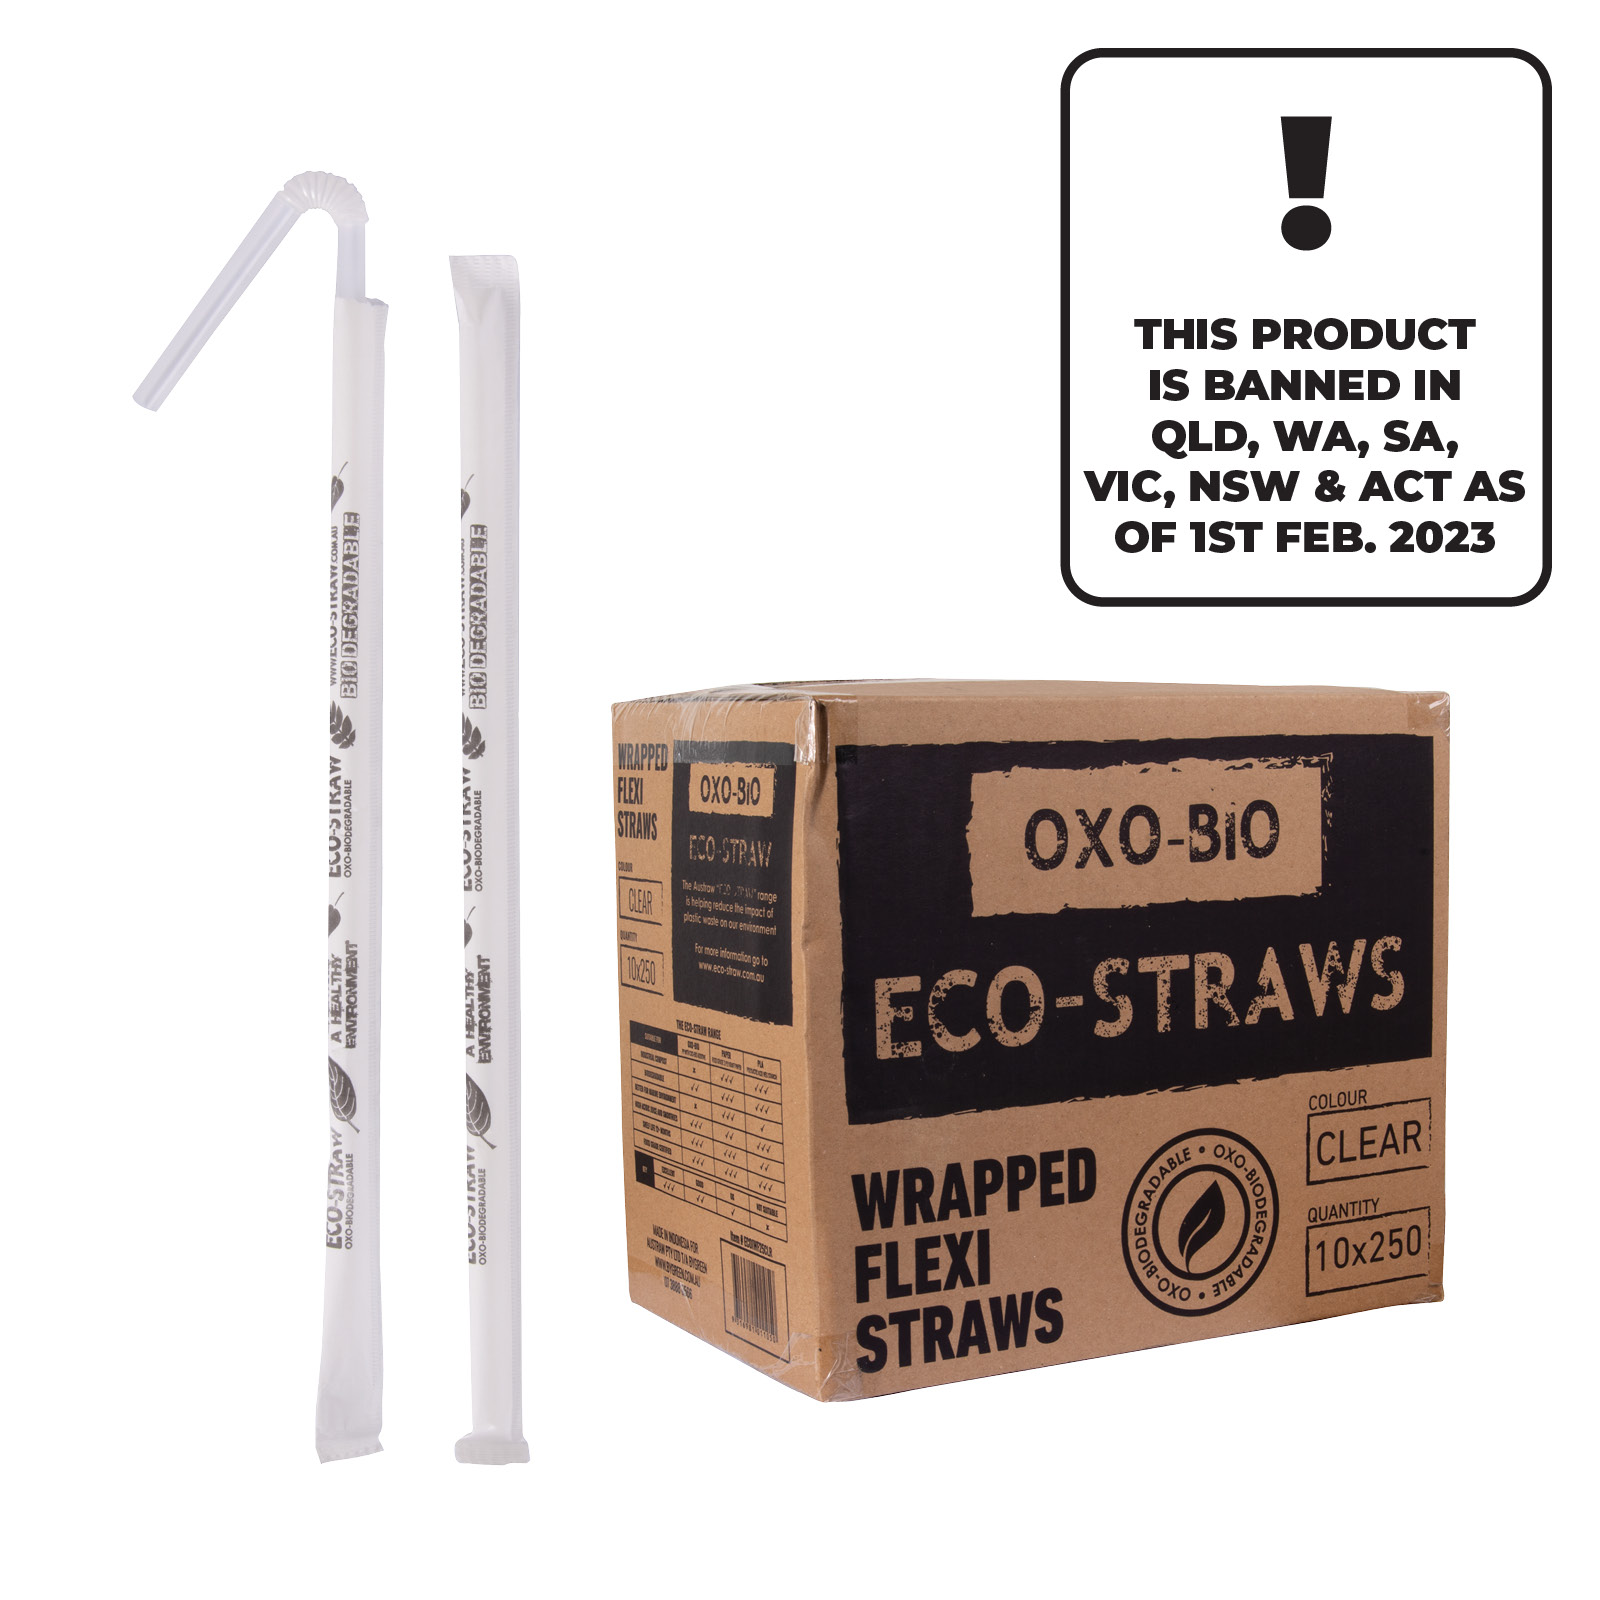 Oxo-Bio Straws breaking down